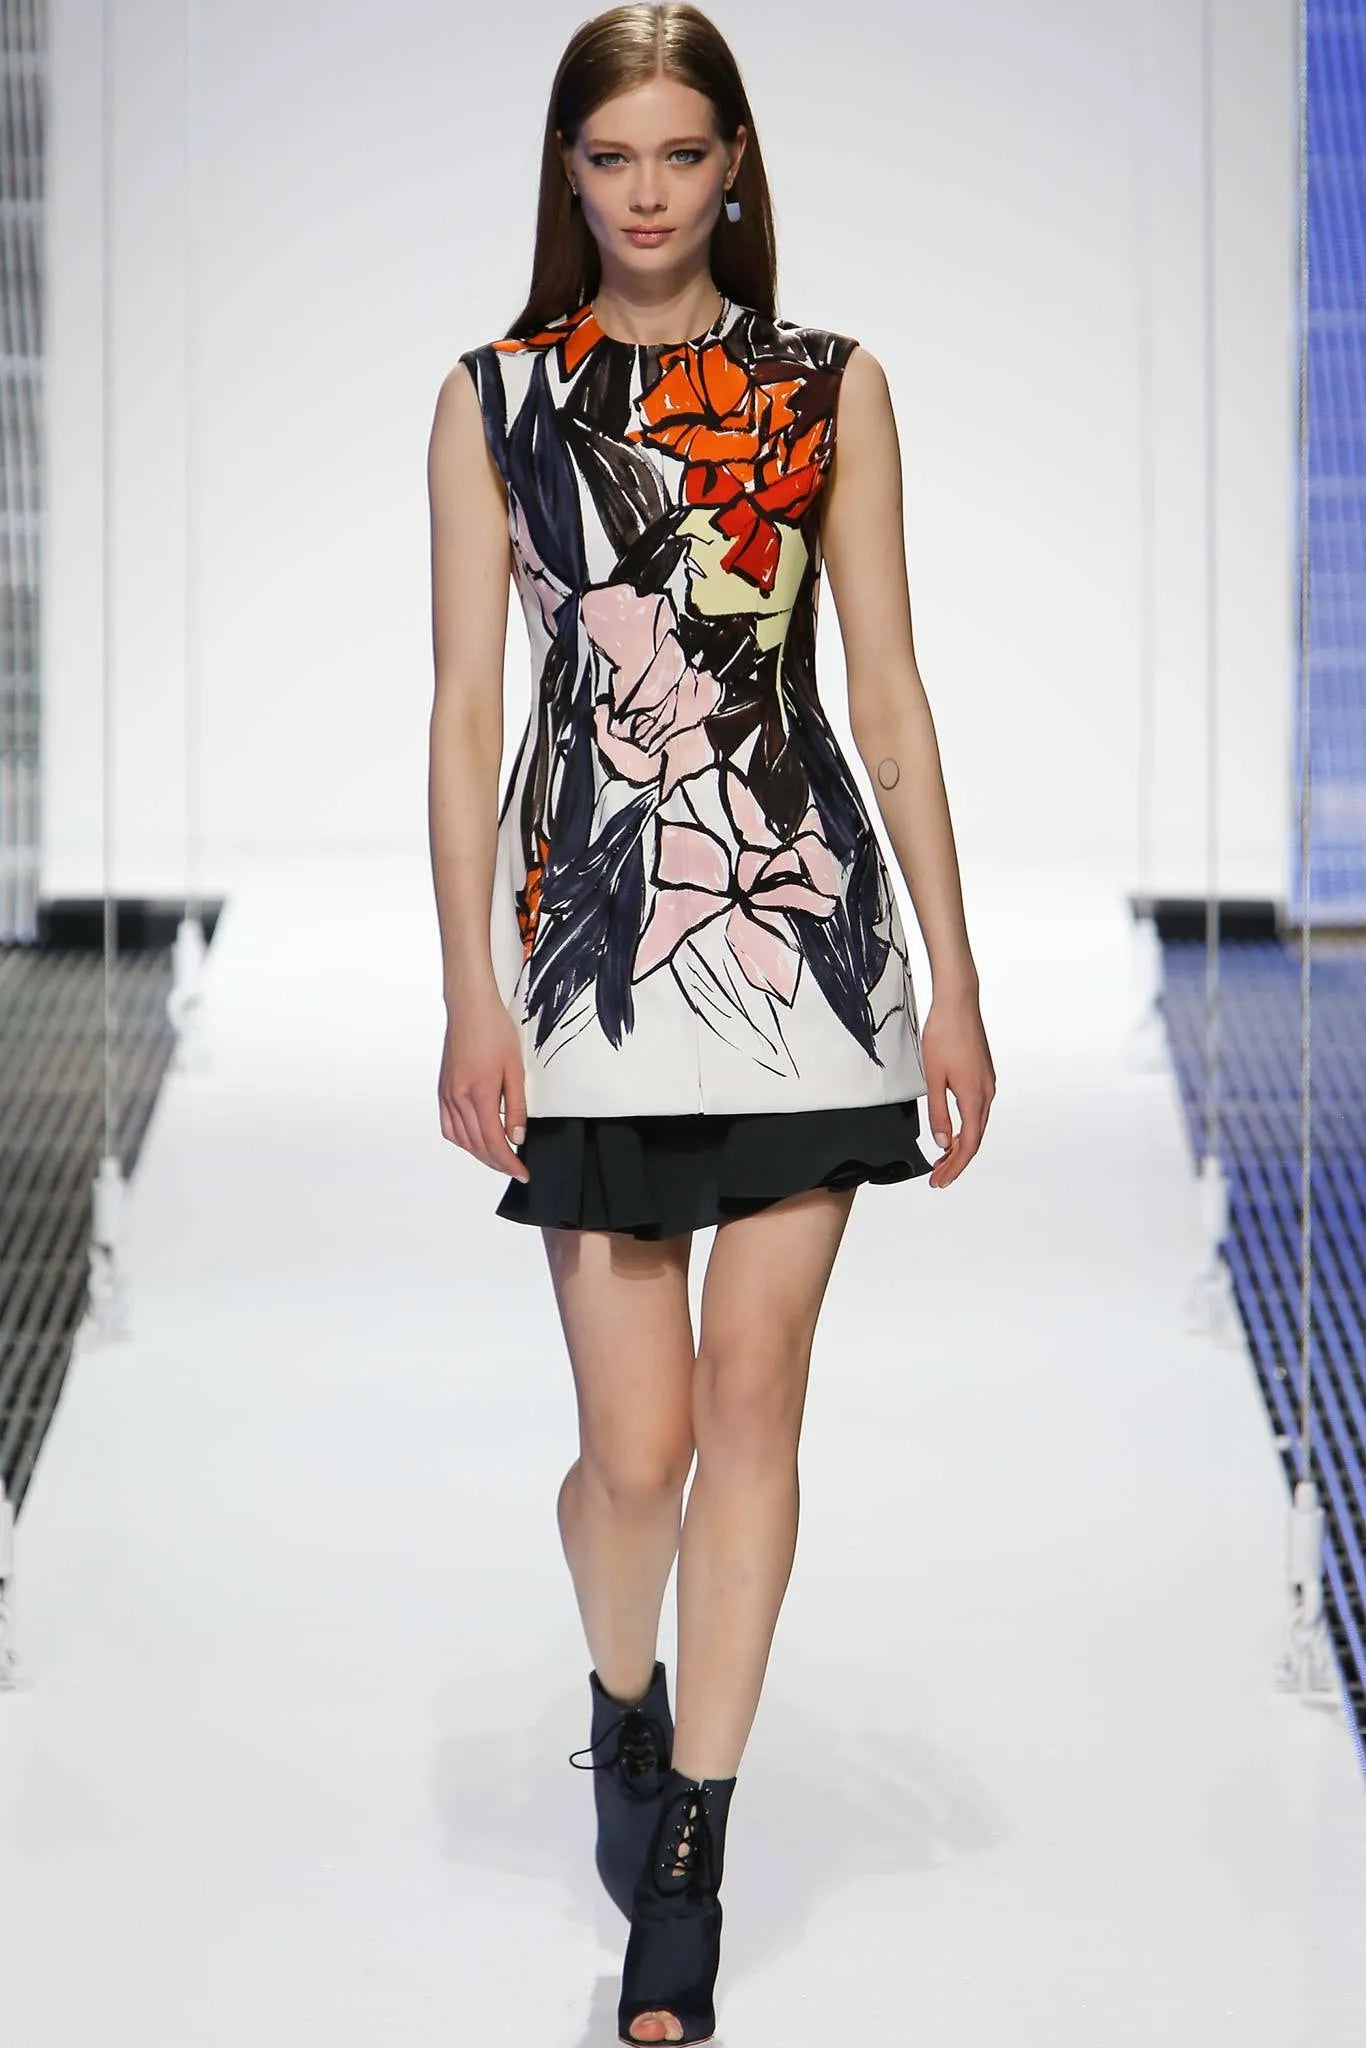 Christian Dior dress 2015 – Merveilles De Babellou